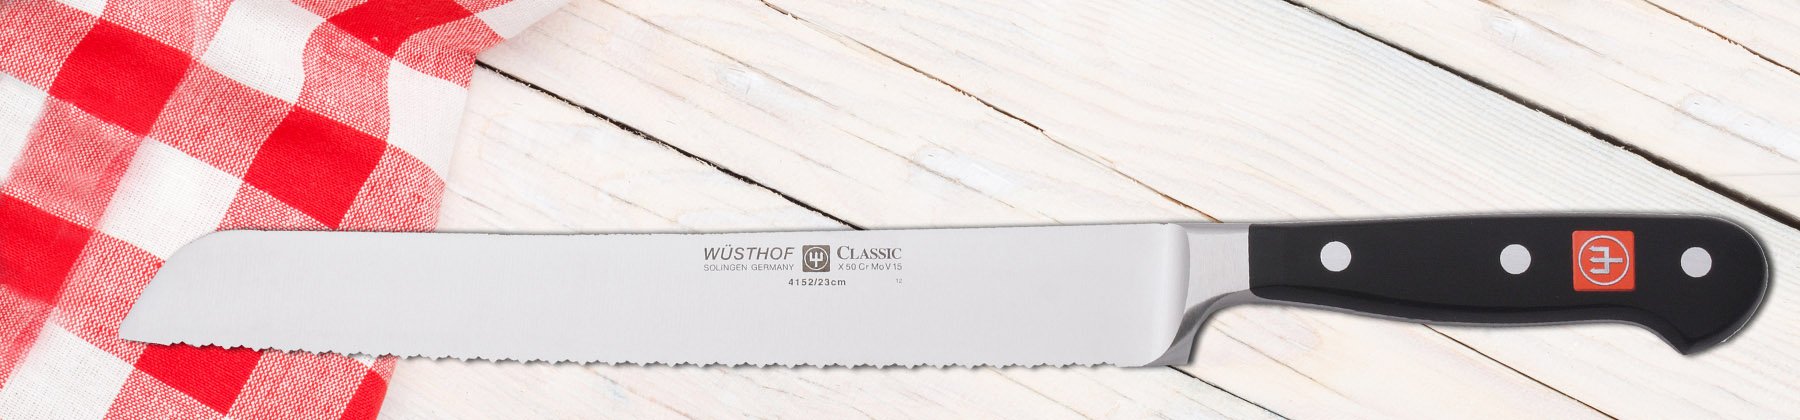 Photo of Wusthof bread knives.